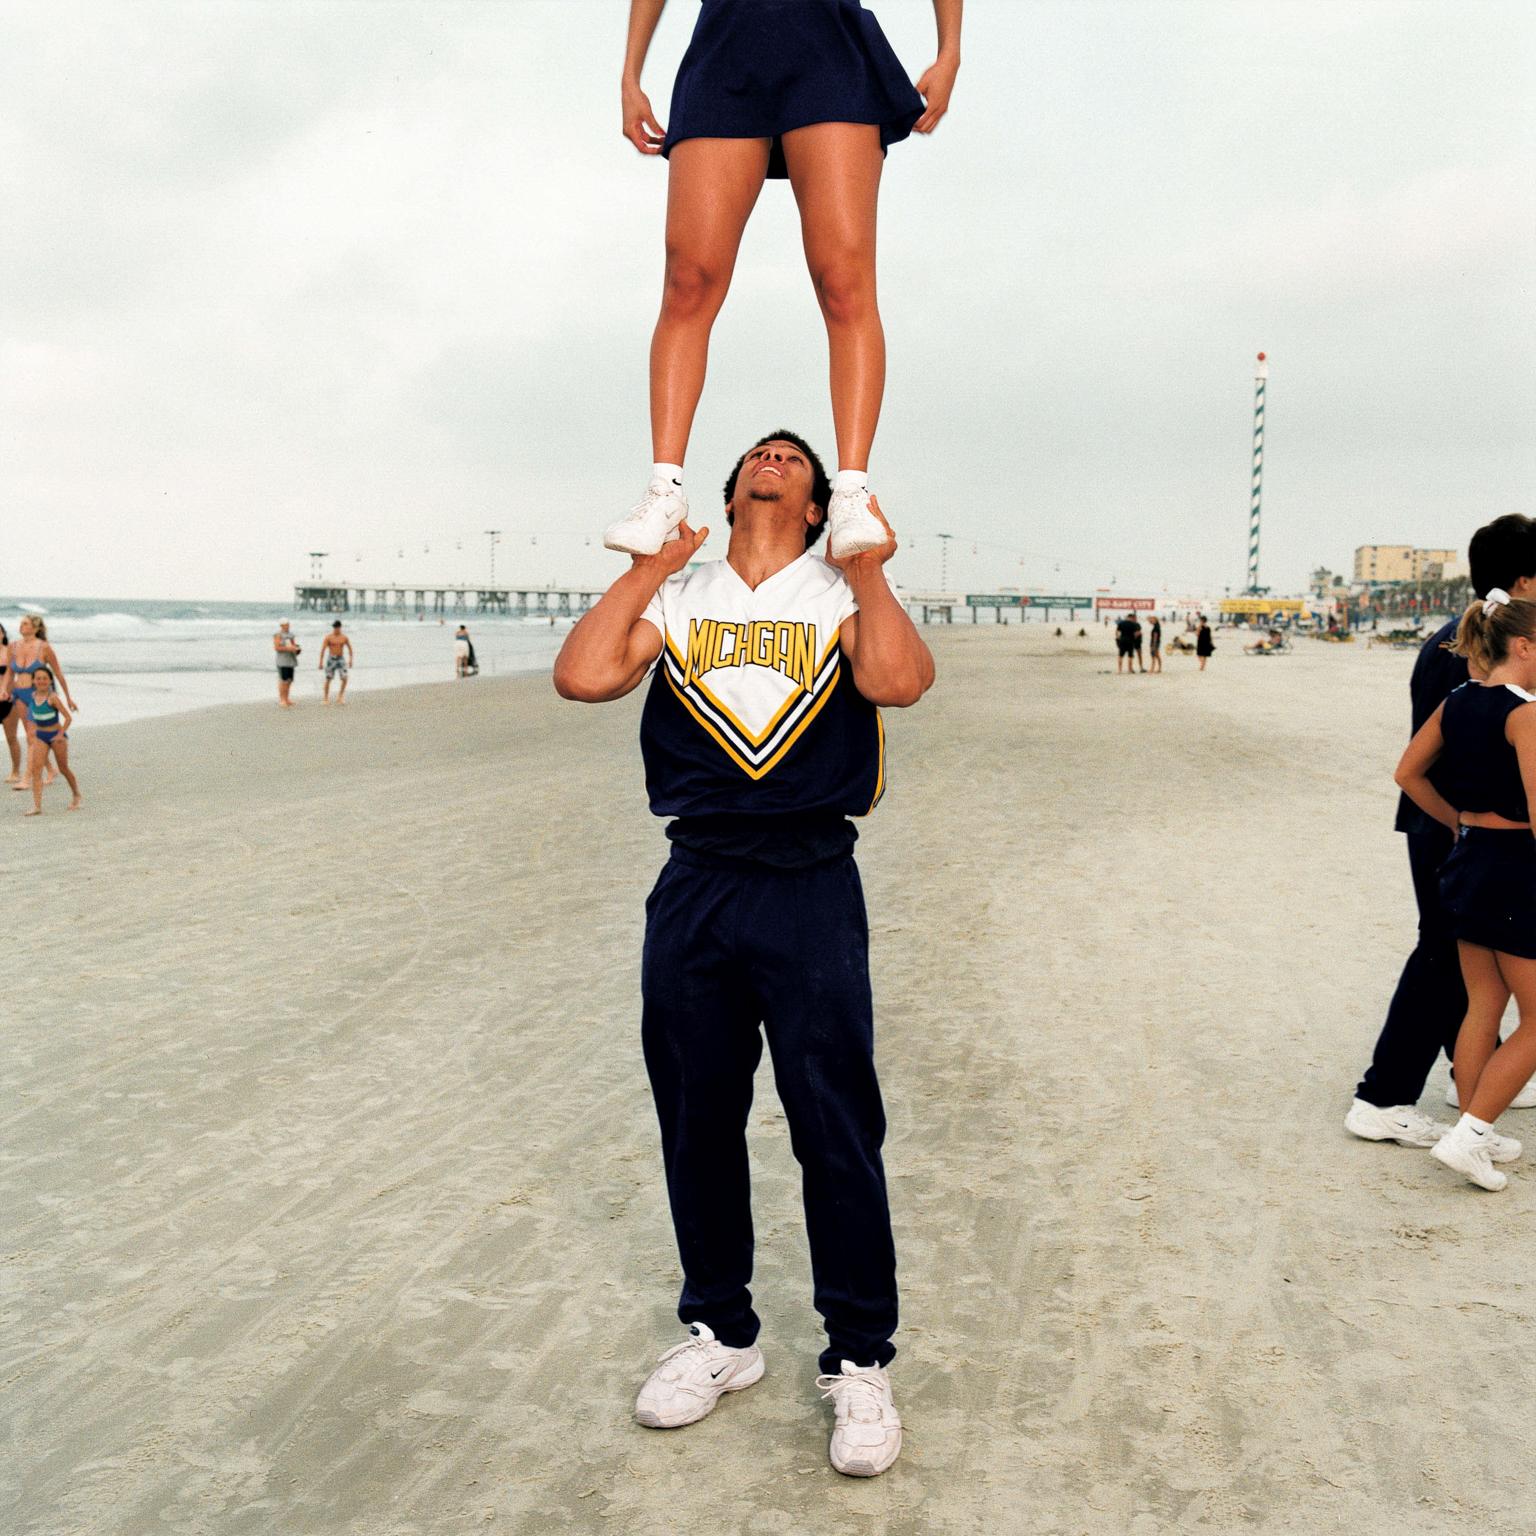 Brian Finke Figurative Photograph - Untitled (Cheerleading no. 53)